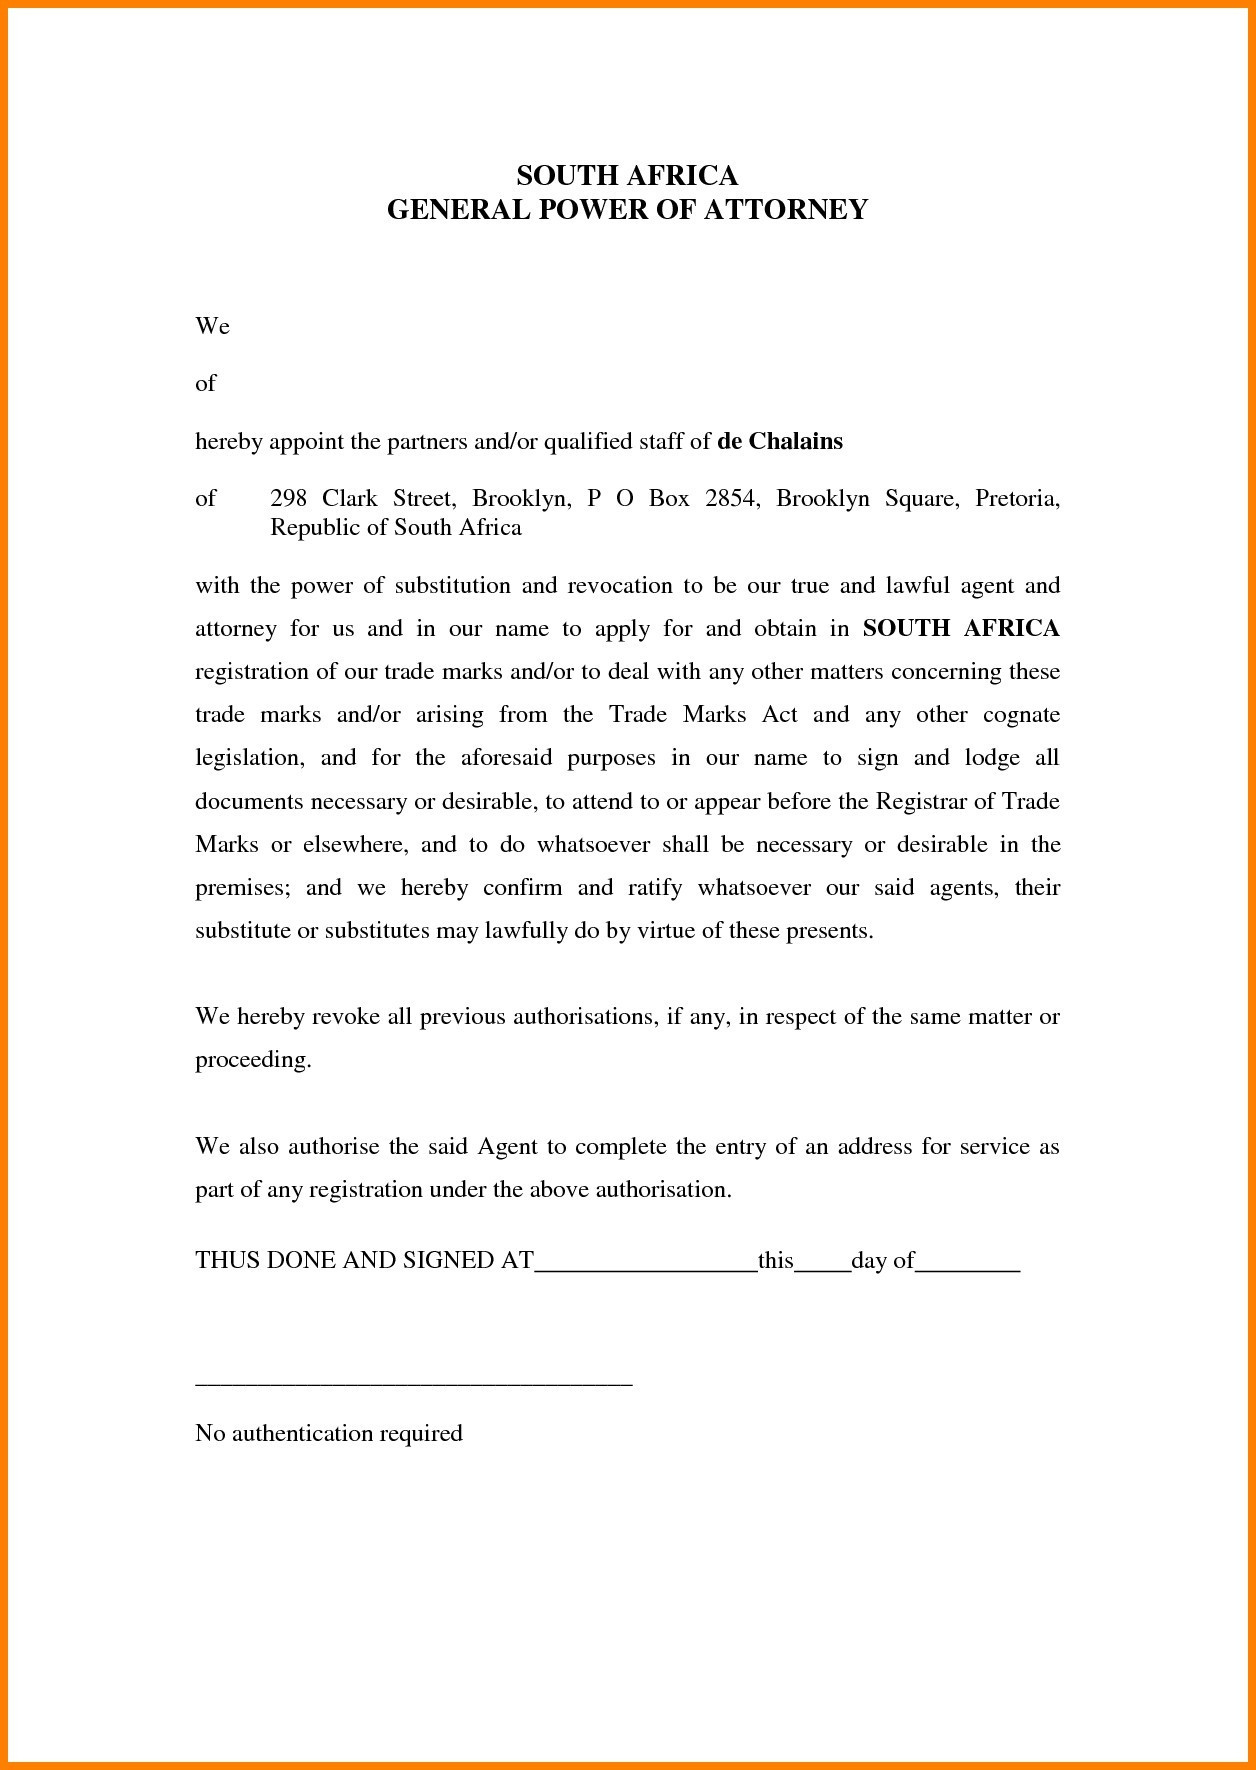 sample notarized letter for guardianship